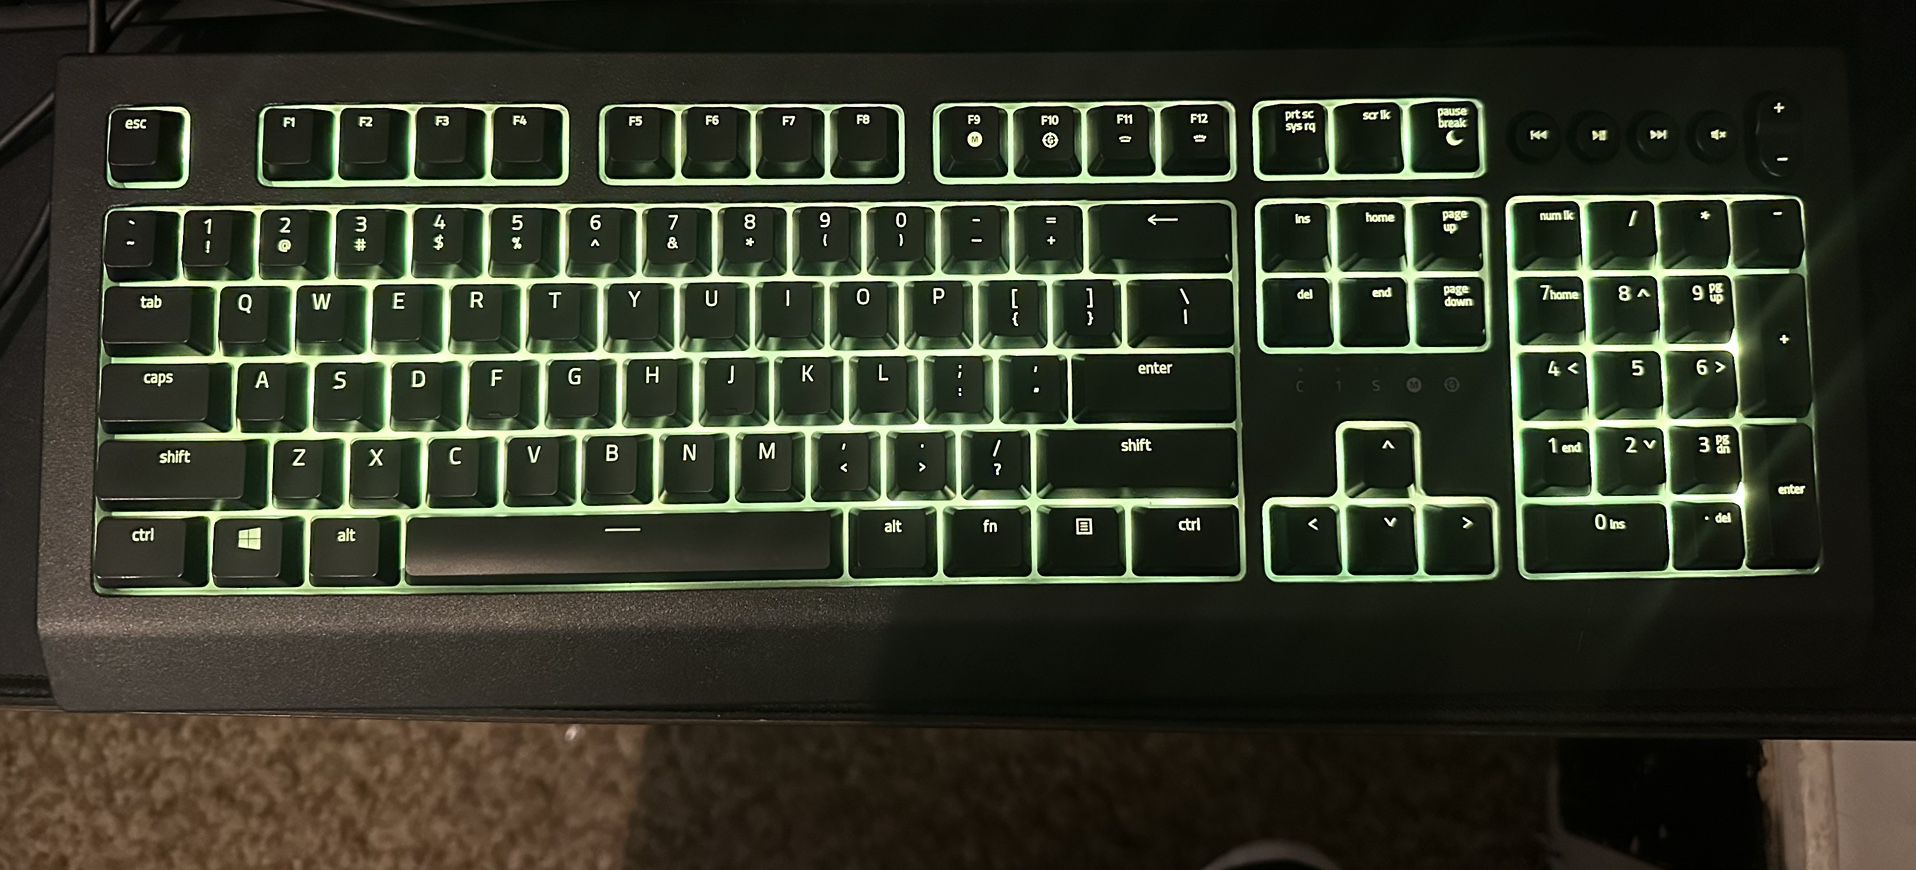 Razor Full Size Gaming Keyboard 